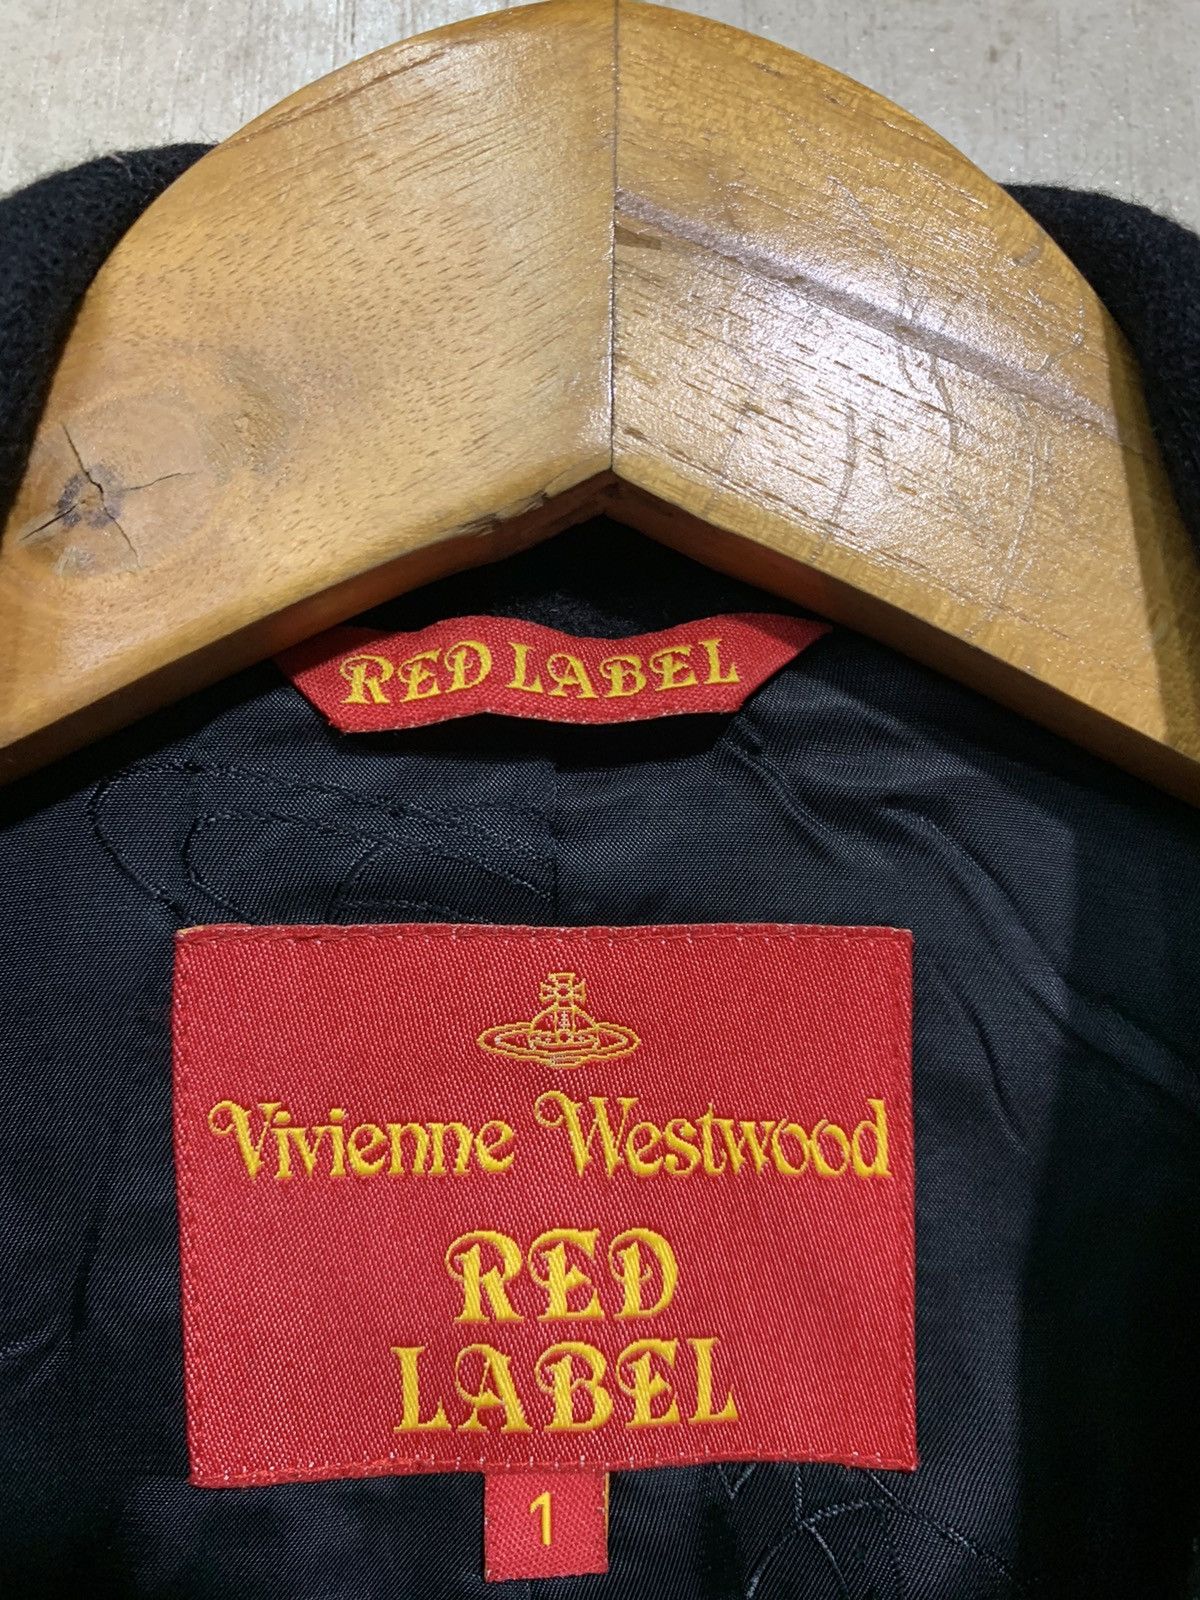 🔥V.WESTWOOD RED LABEL WOOL JACKETS - 8